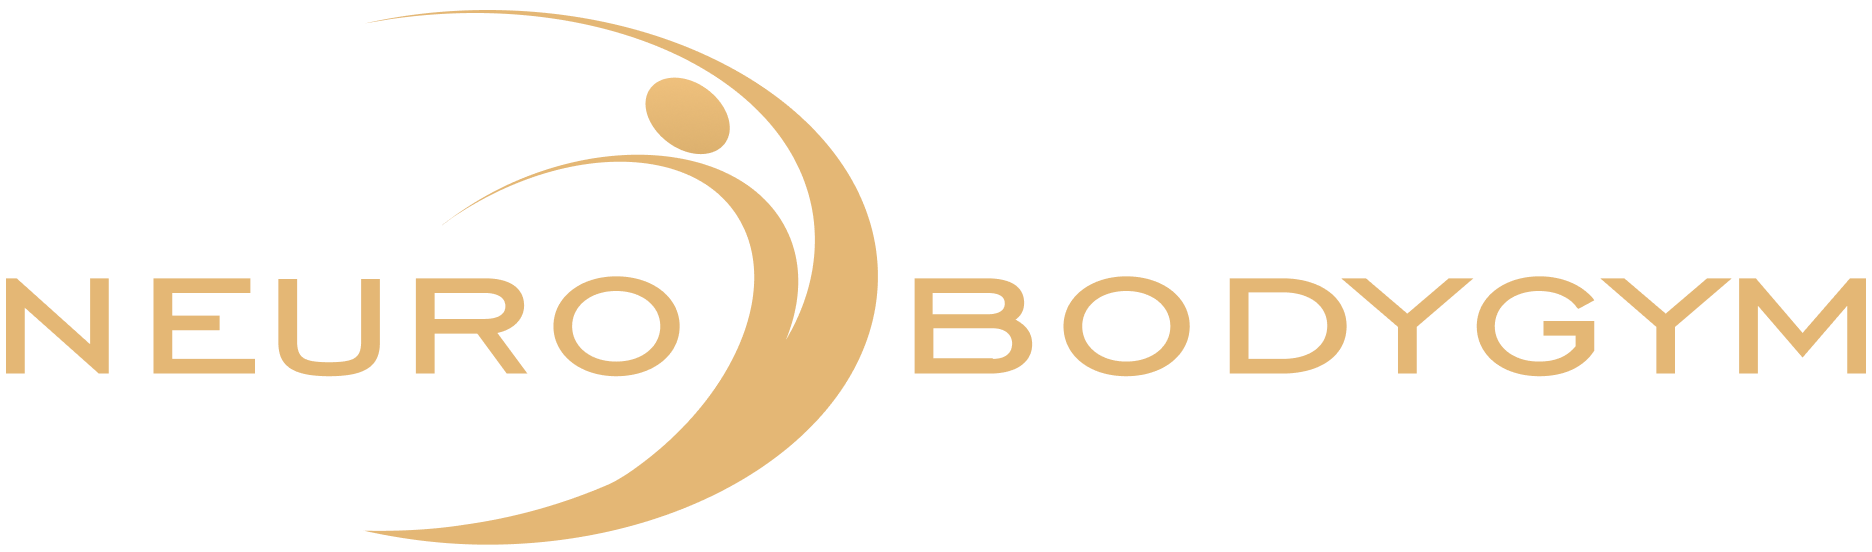 NeuroBodyGym Logo